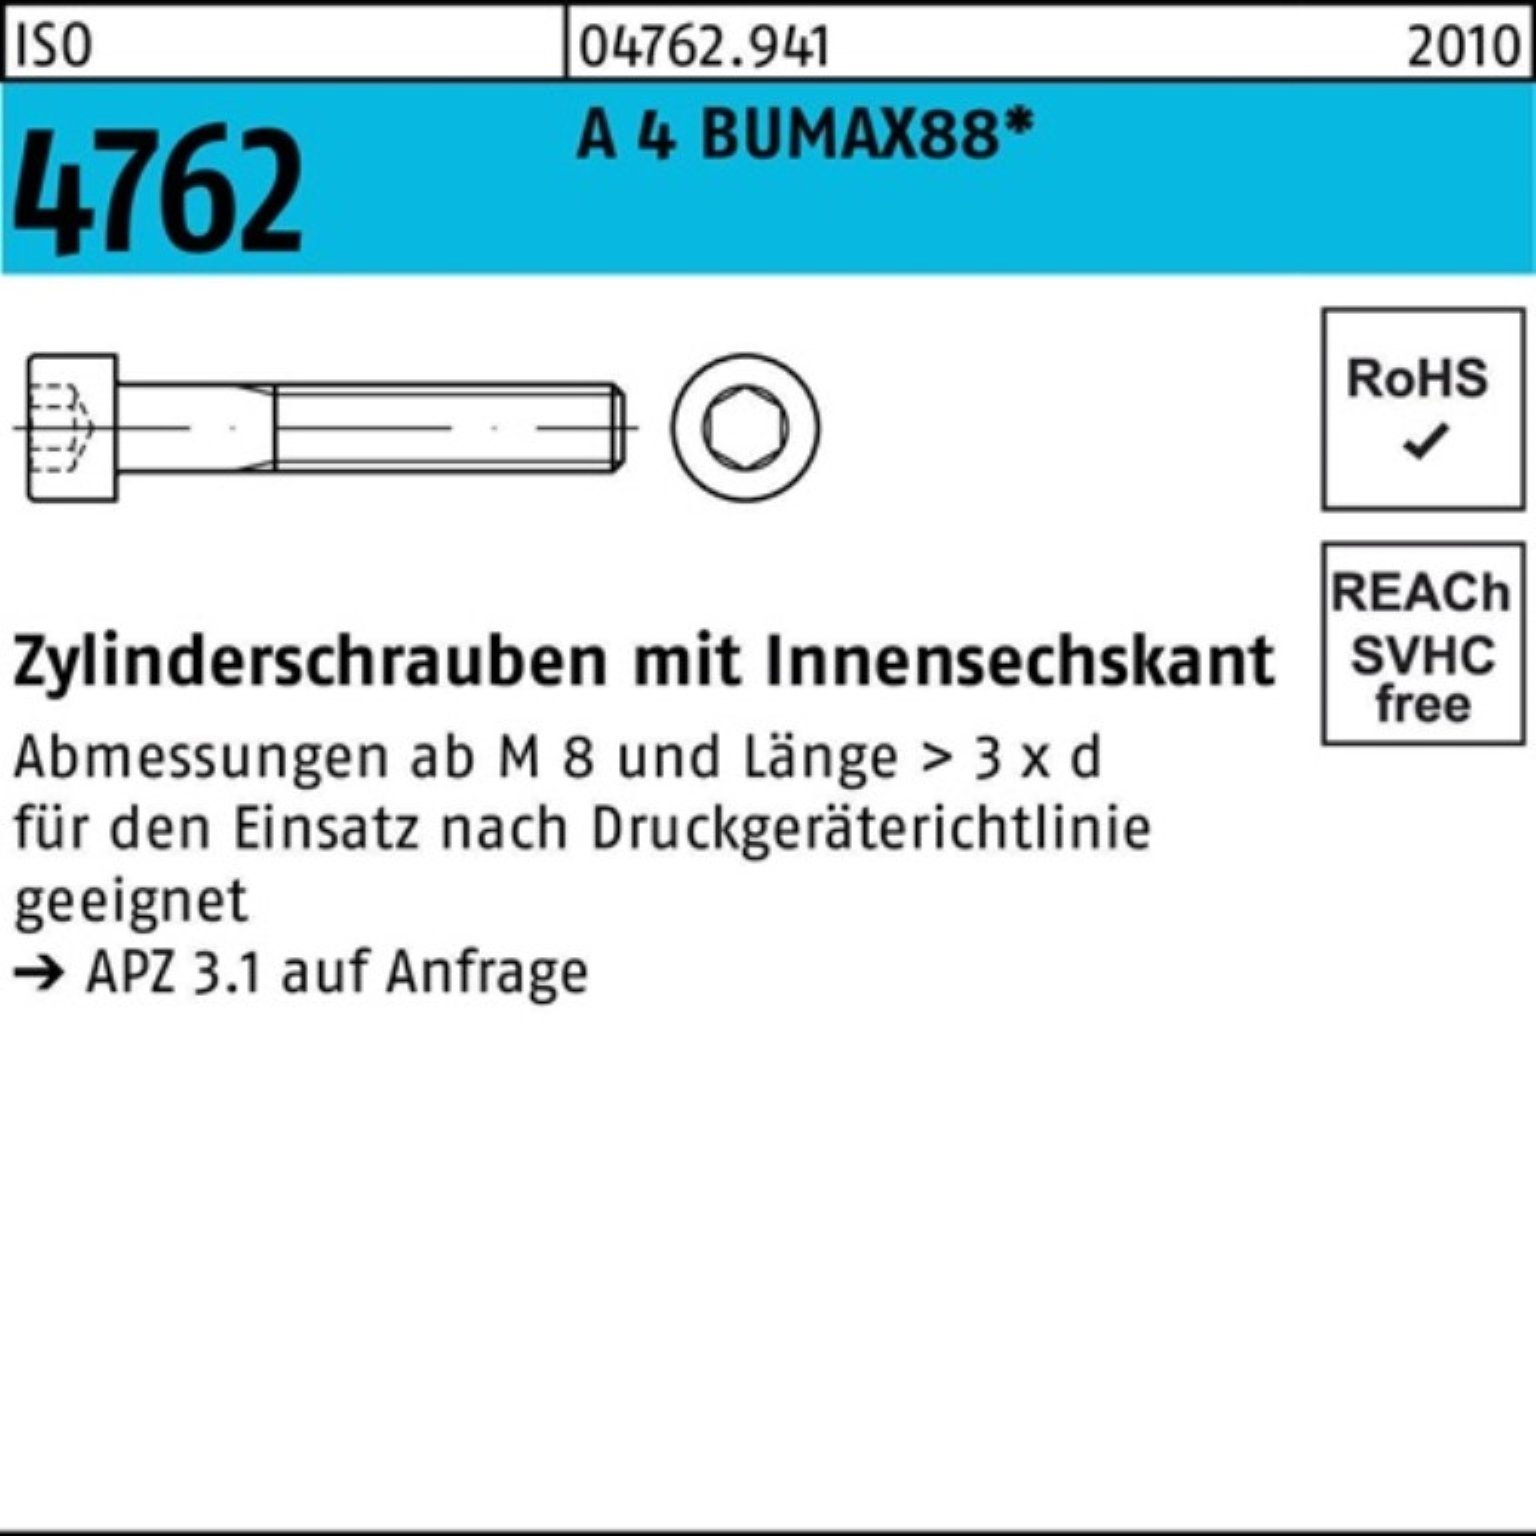 A Pack 100er 4 Zylinderschraube BUMAX88 Zylinderschraube 4762 M12x Bufab 35 25 Innen-6kt ISO